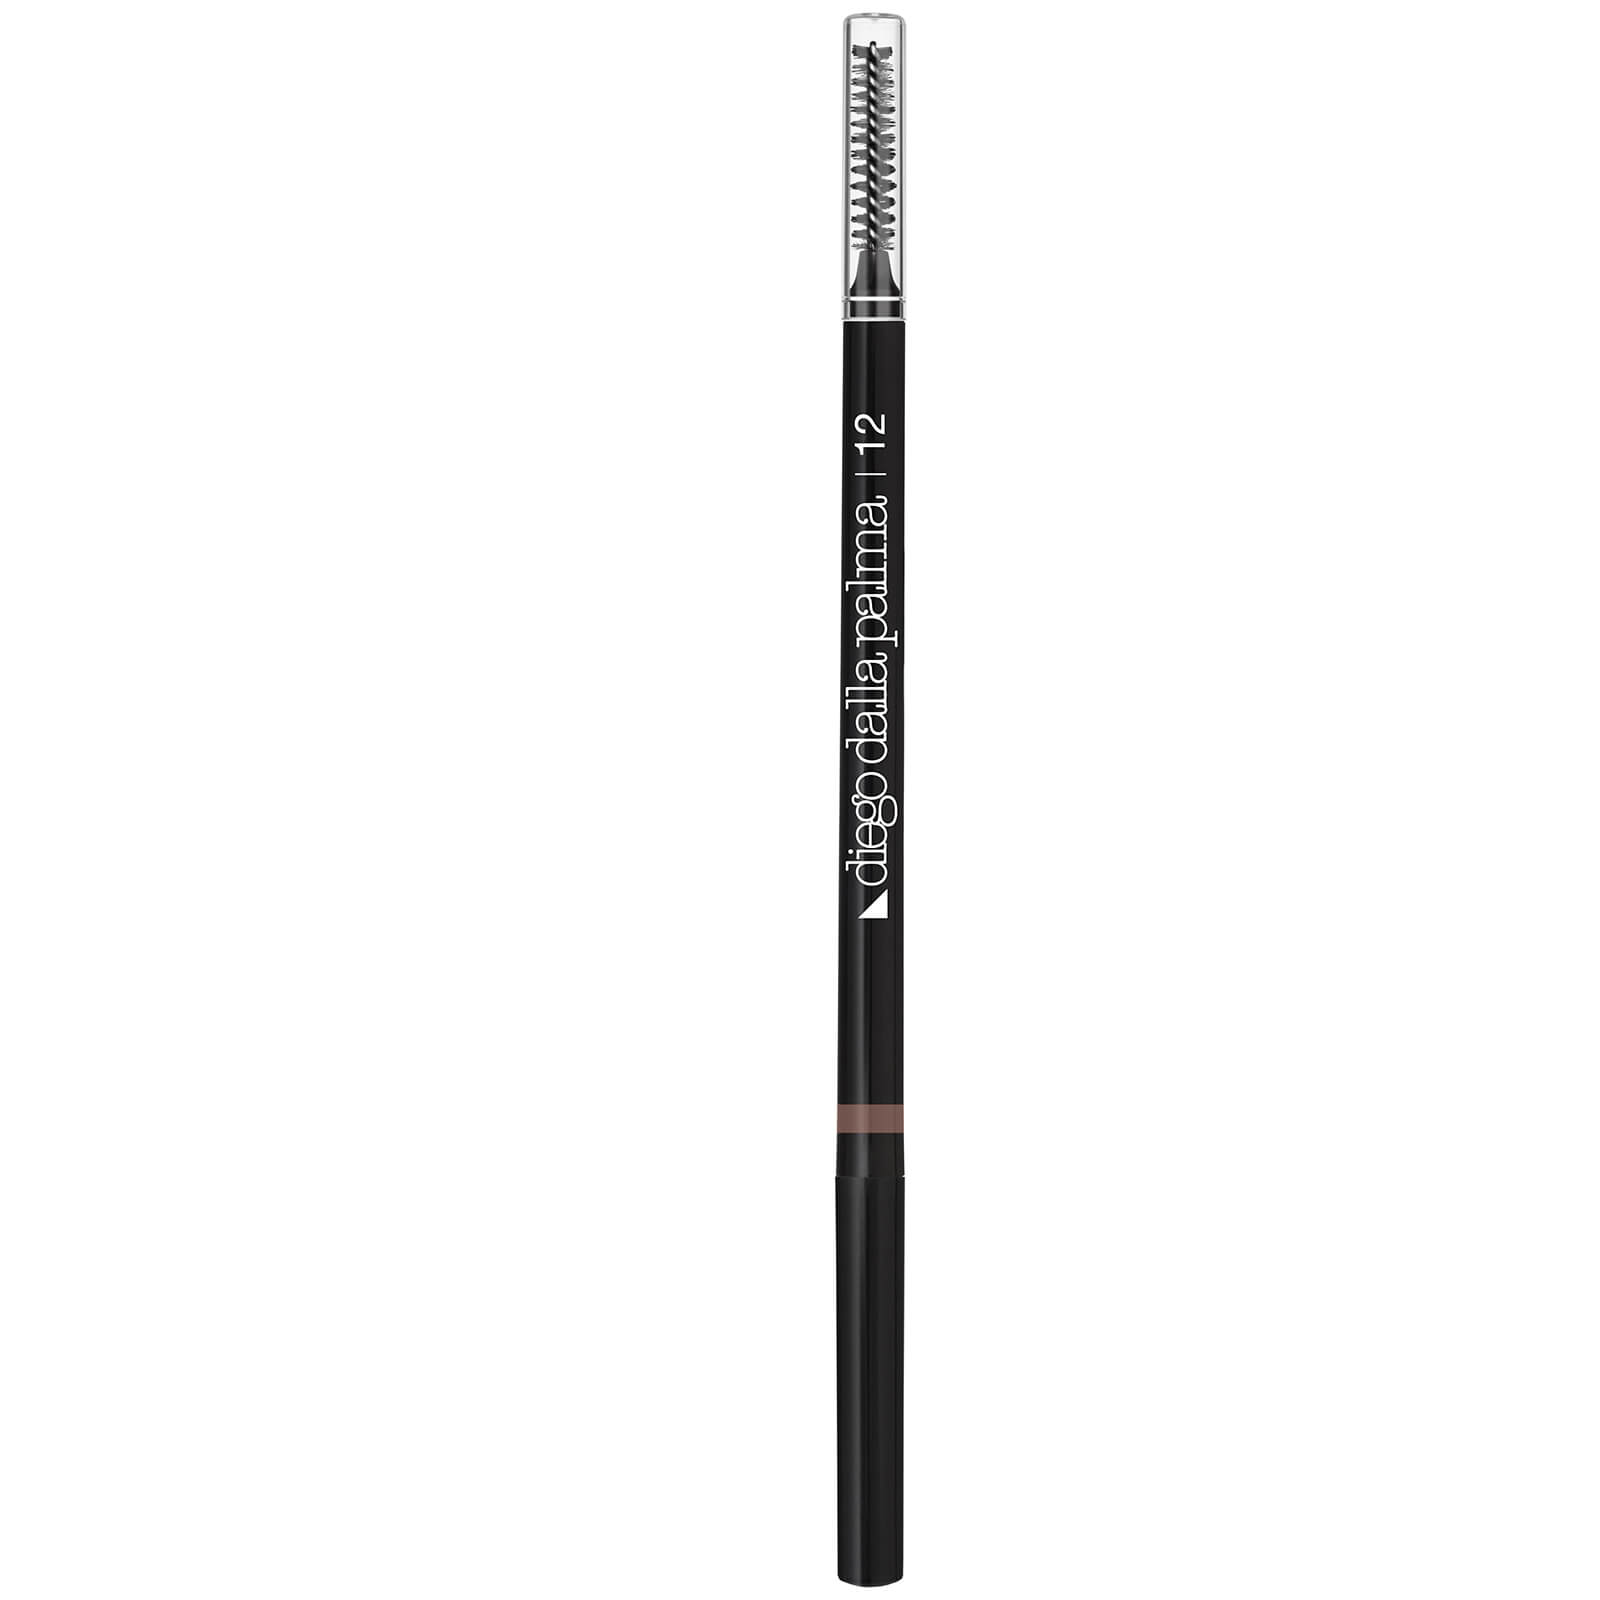 Diego Dalla Palma High Precision Long Lasting Water Resistant Brow Pencil (Various Shades) - Medium